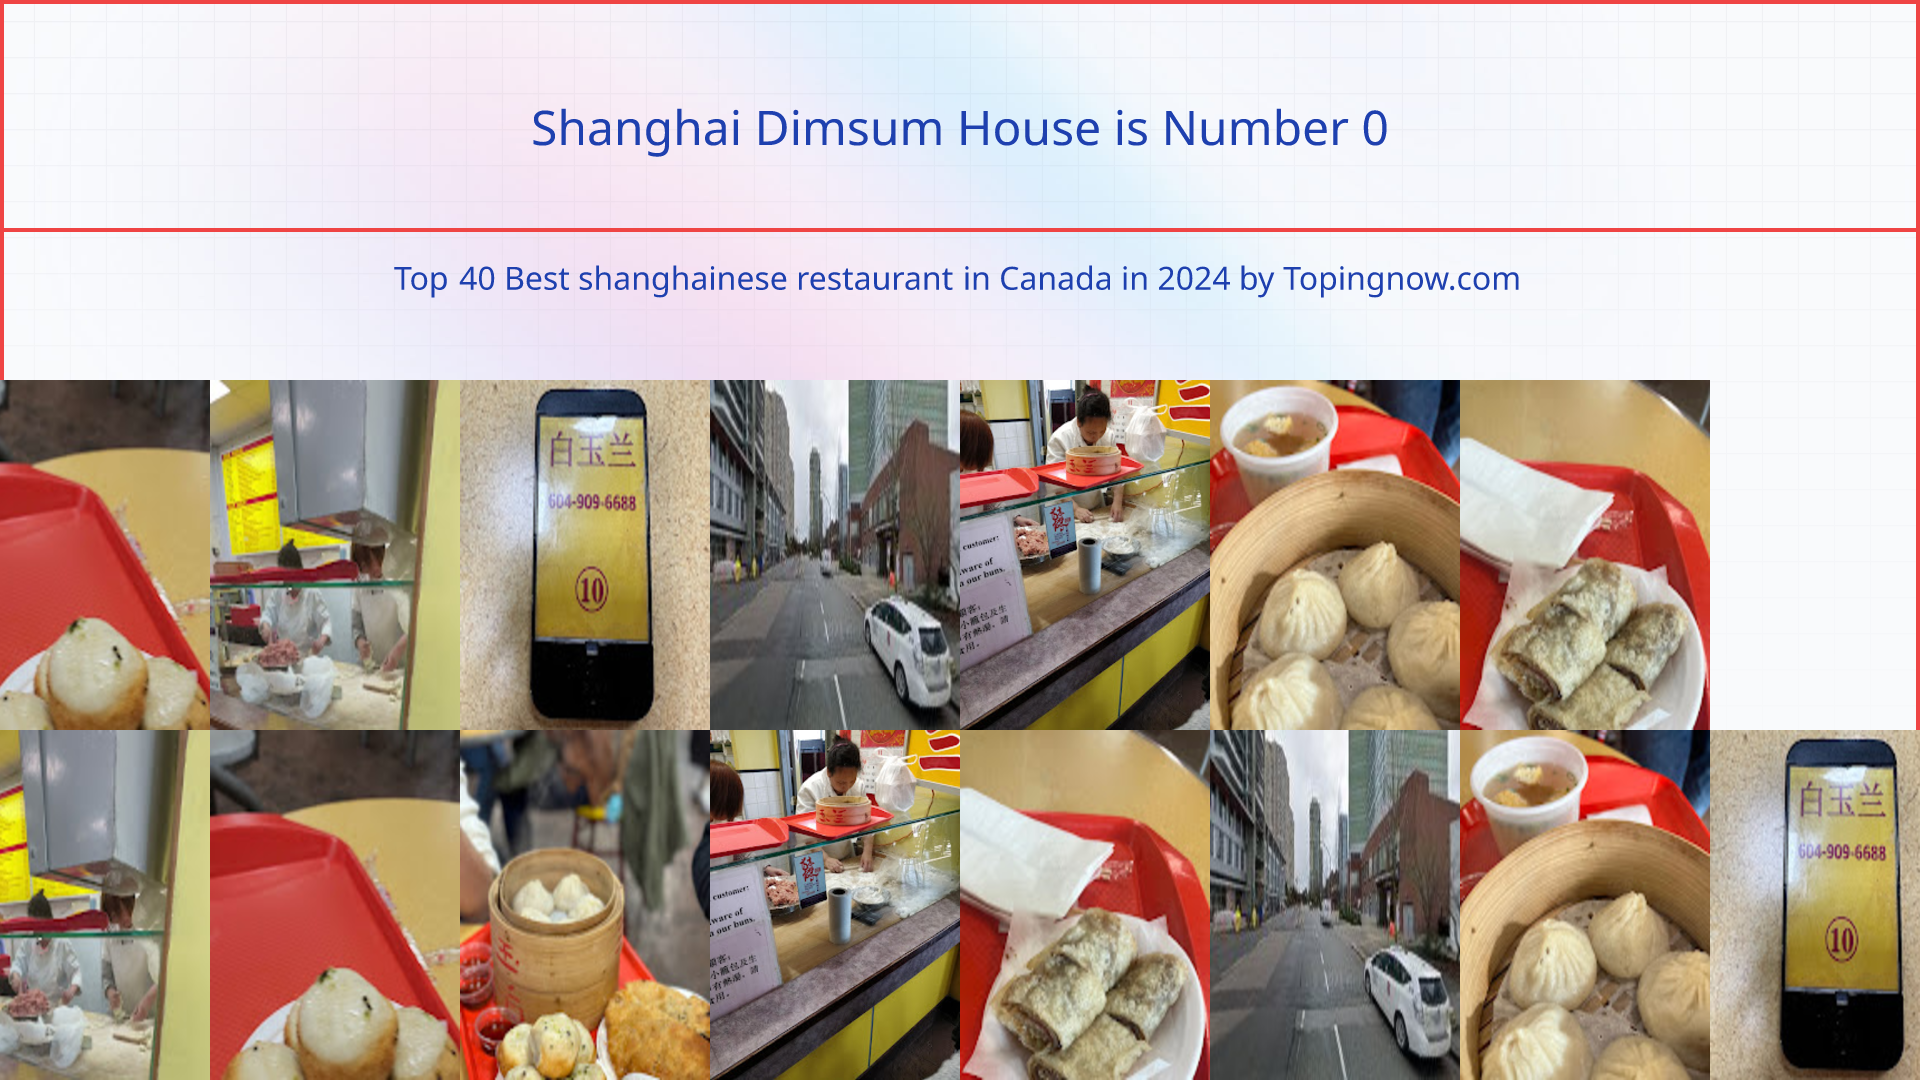 Shanghai Dimsum House: Top 40 Best shanghainese restaurant in Canada in 2024